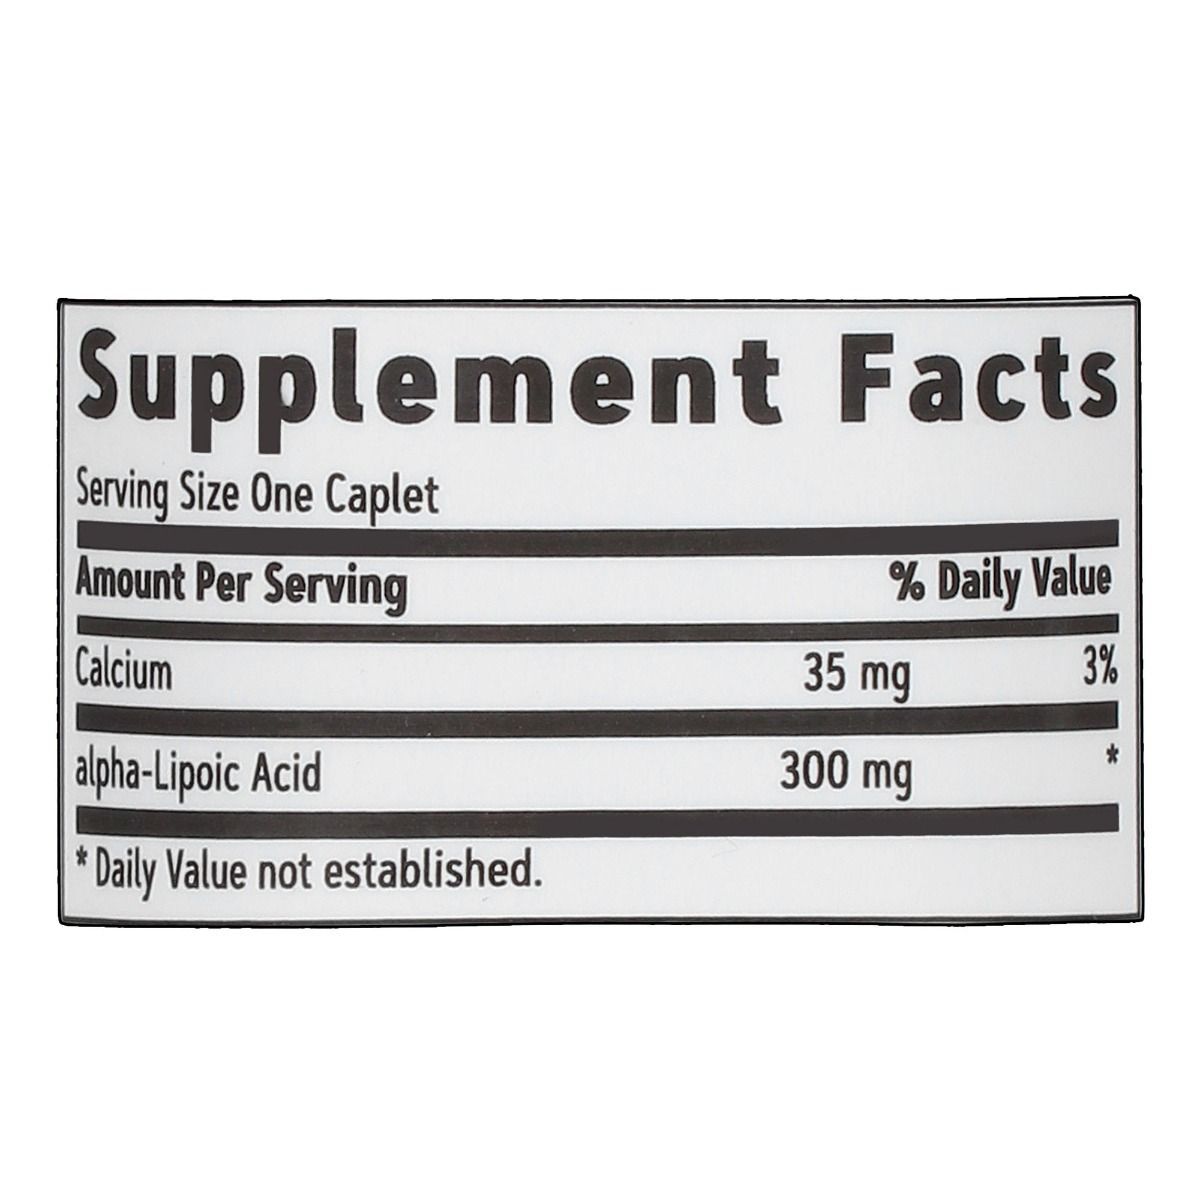 GNC alpha-Lipoic Acid 300mg - Universal Antioxidant for Energy & Healthy Blood Sugar Levels